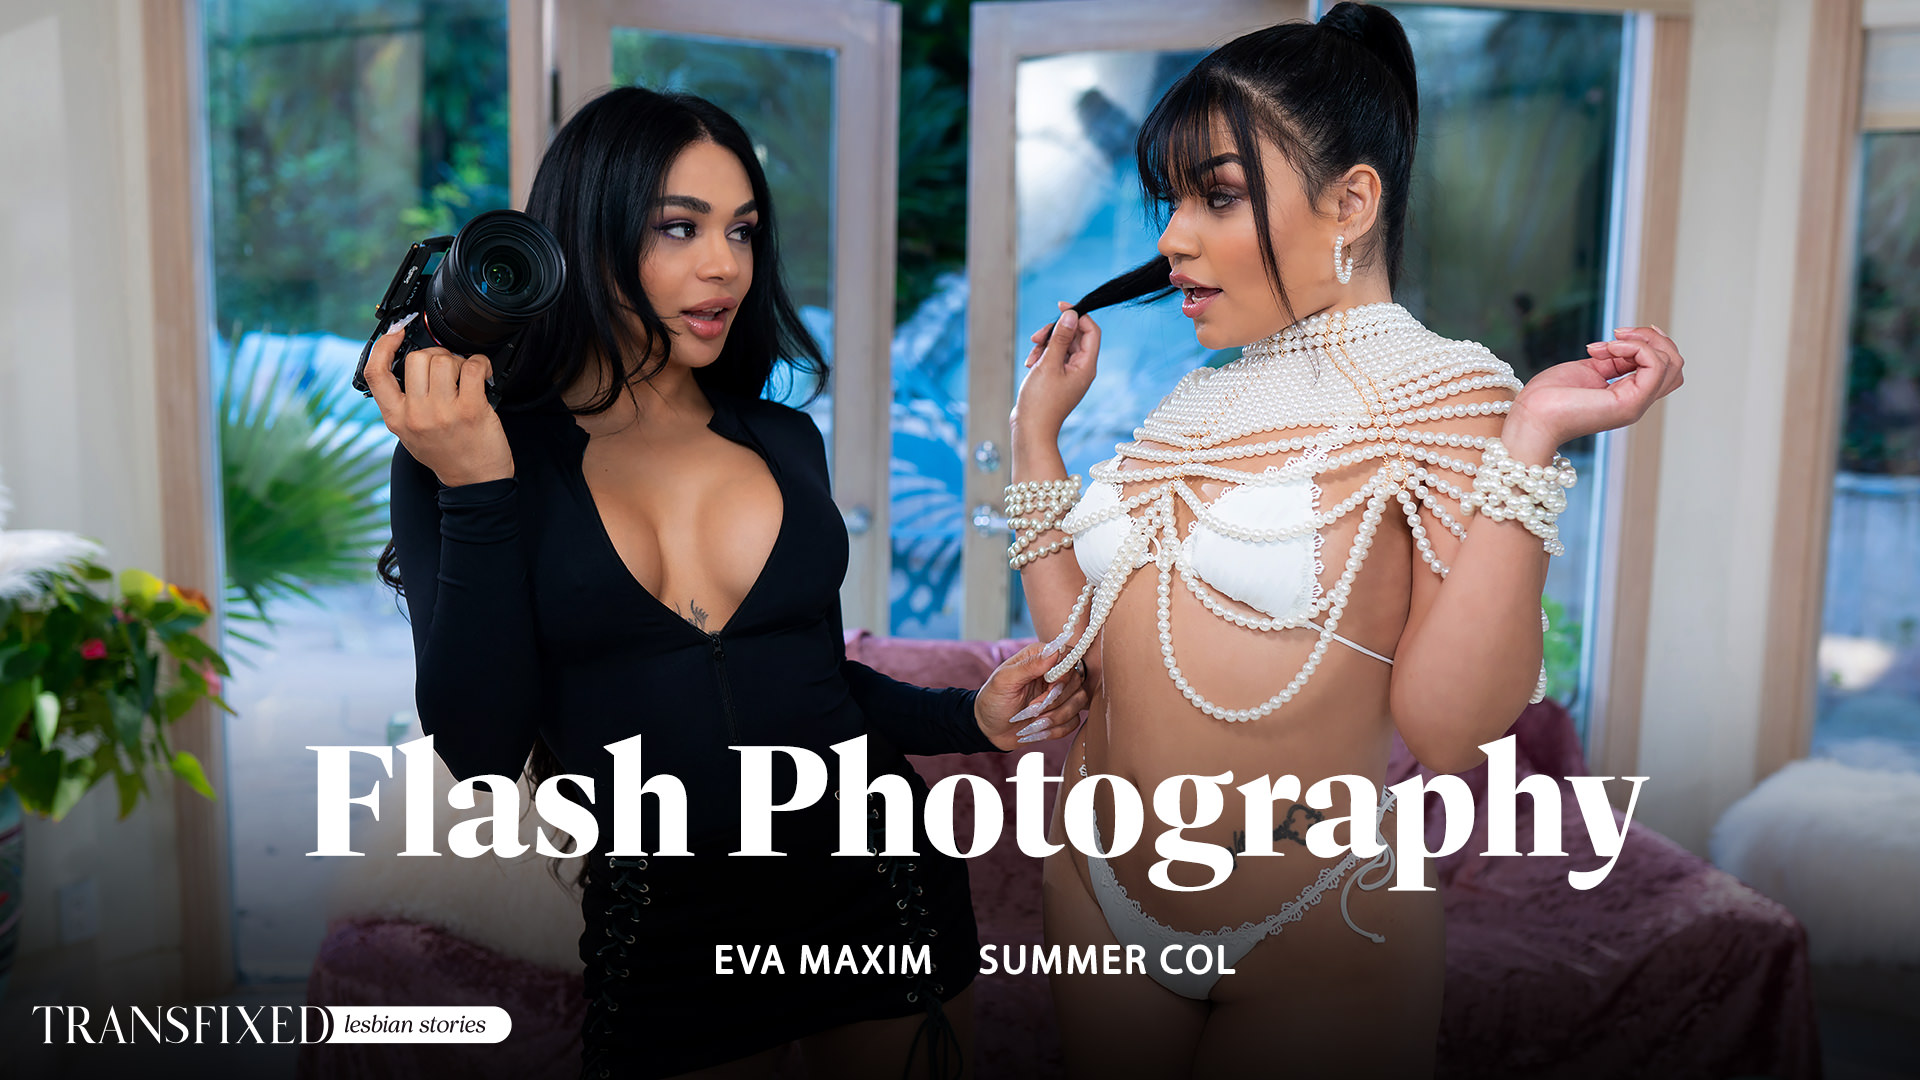 Eva Maxim, Summer Col Flash Photography Transfixed